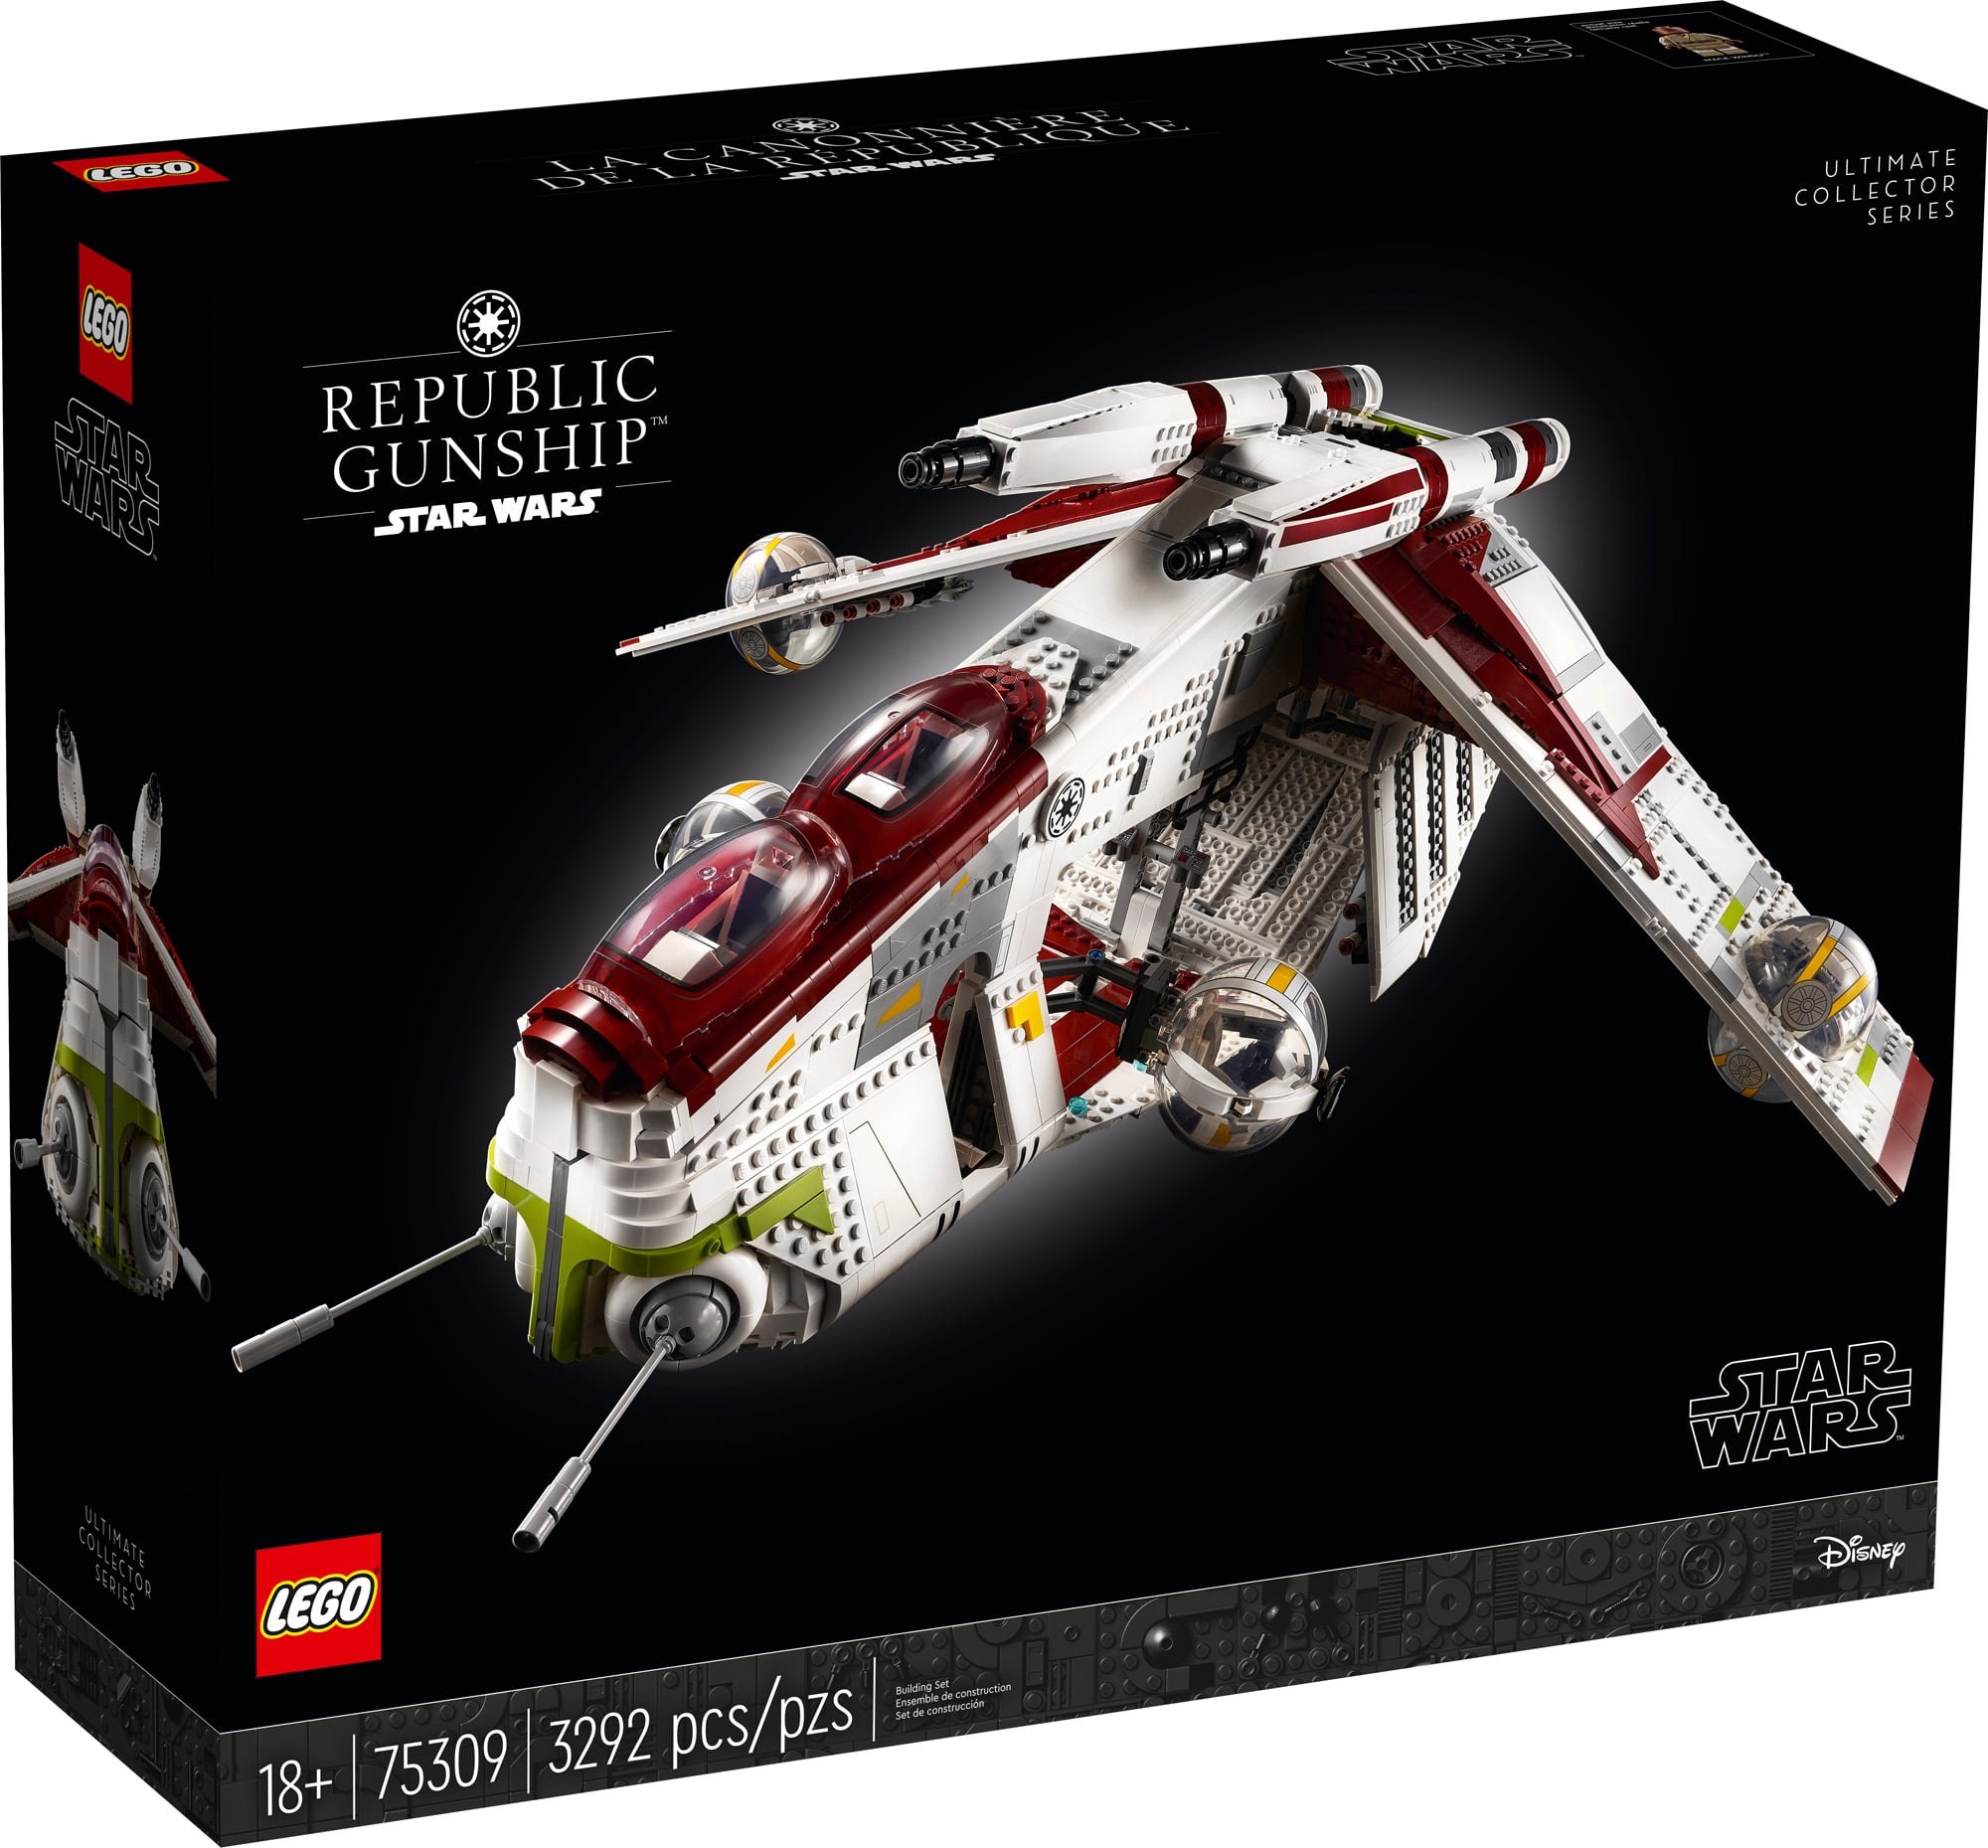 LEGO Star Wars 75309 Ucs Republic Gunship Box 6